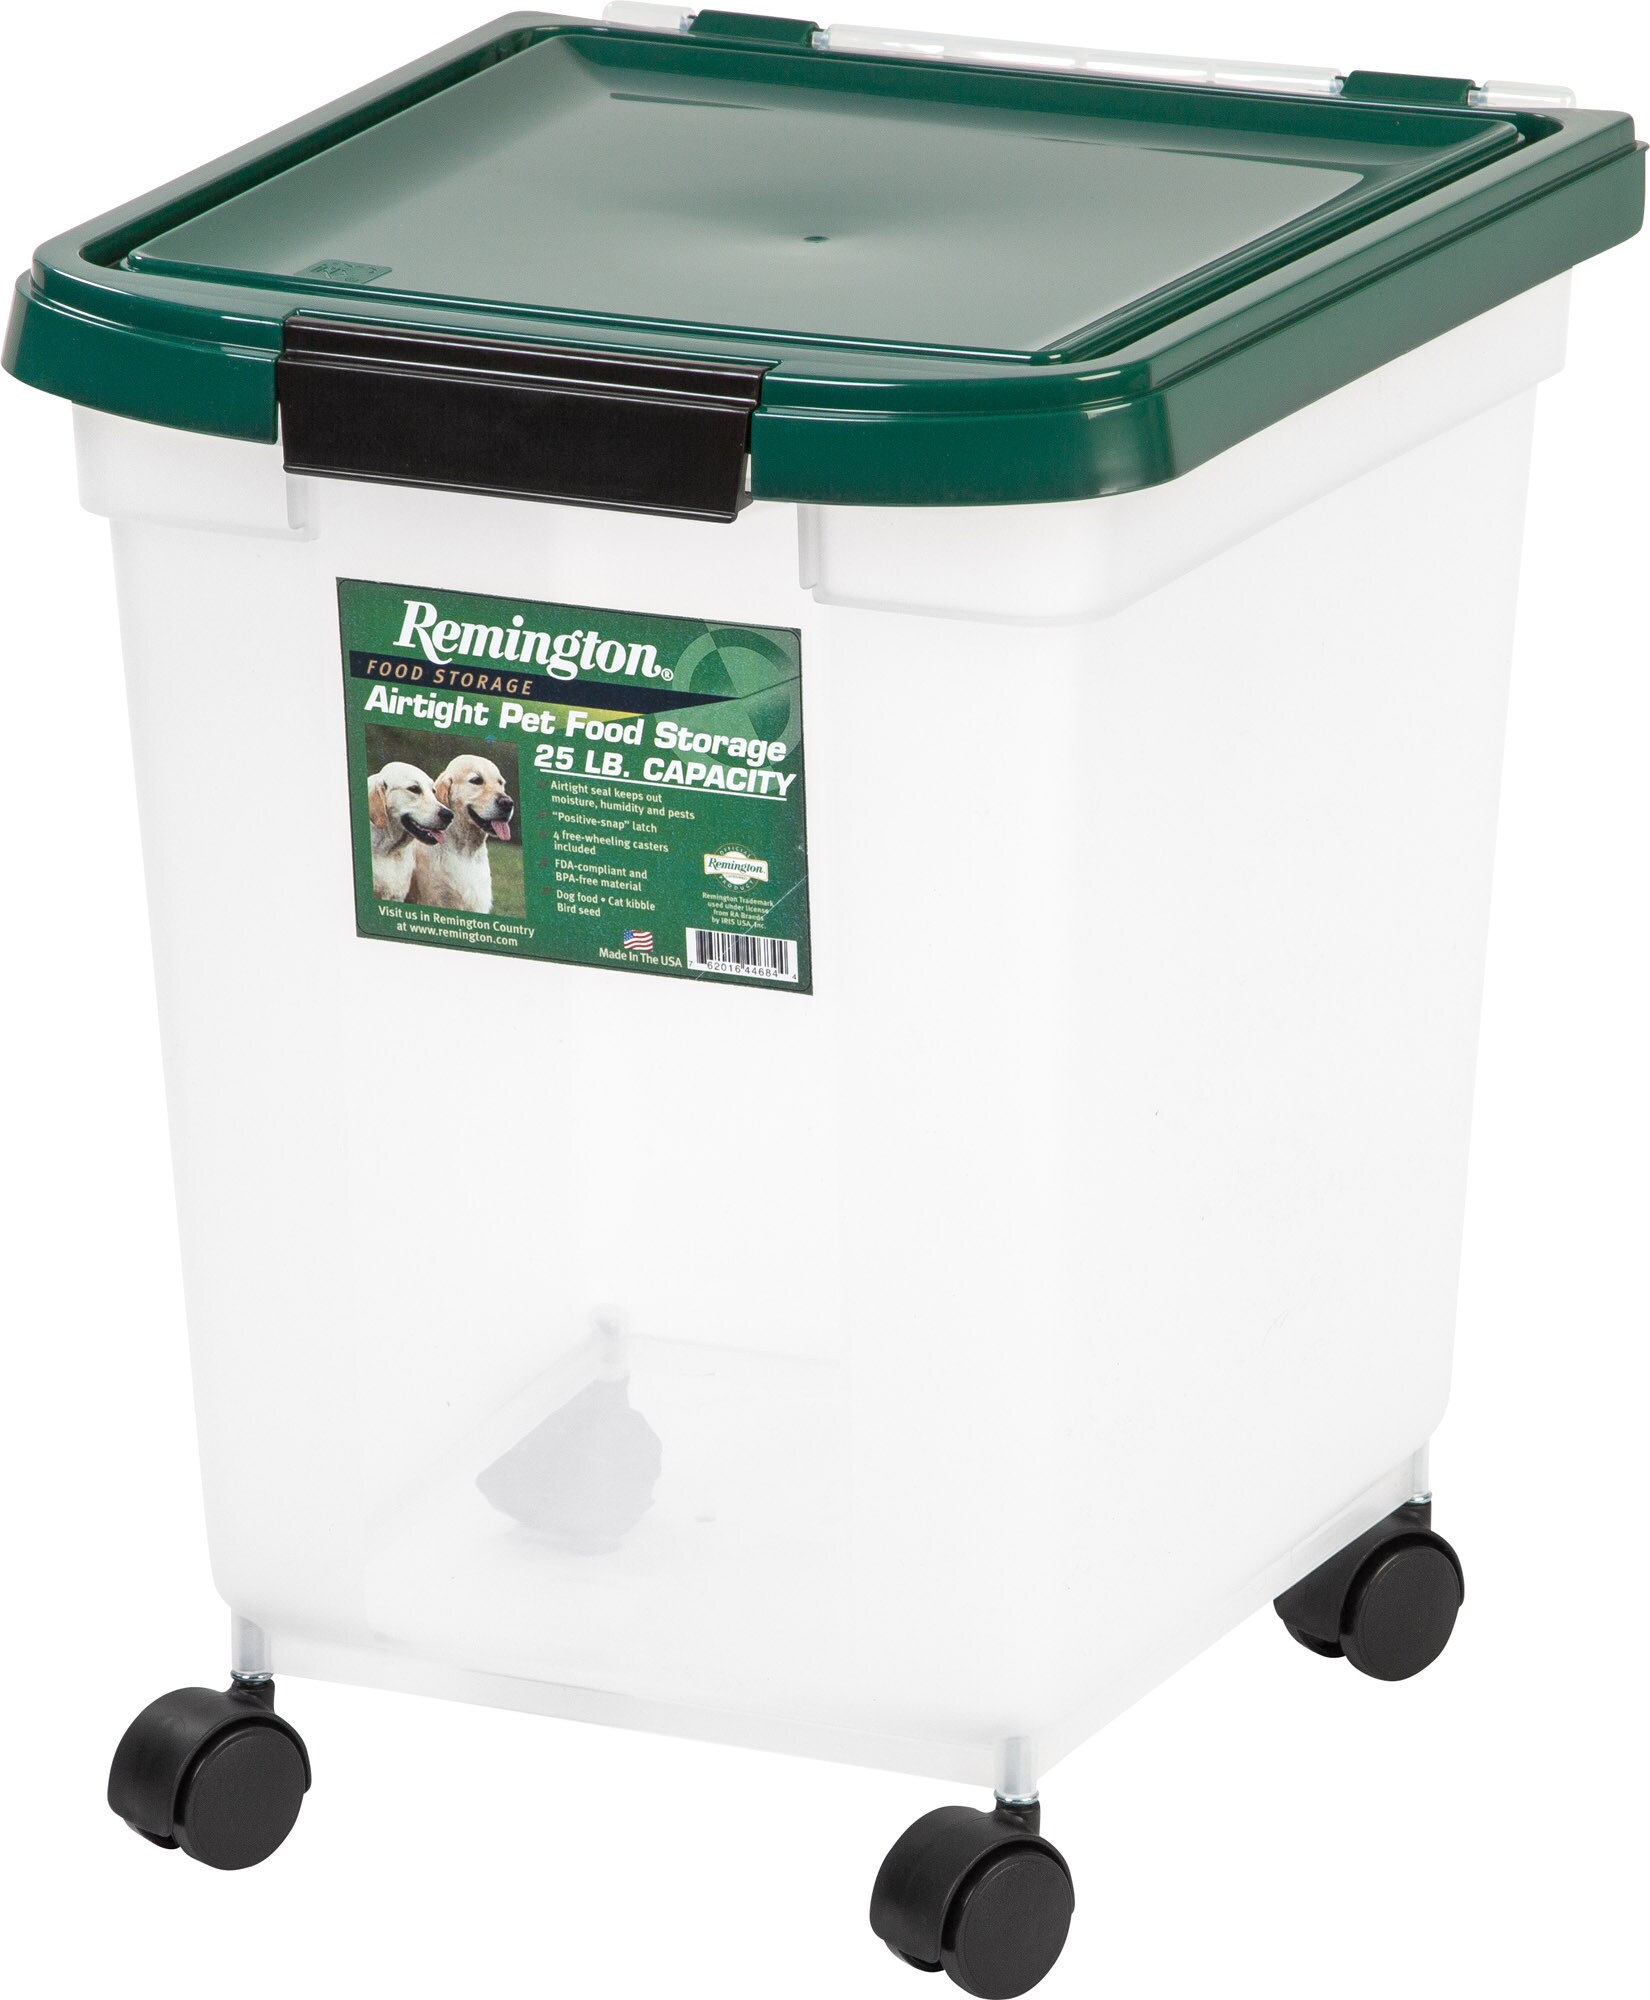 Remington 3-Piece Airtight Pet Food Container Combo, Green